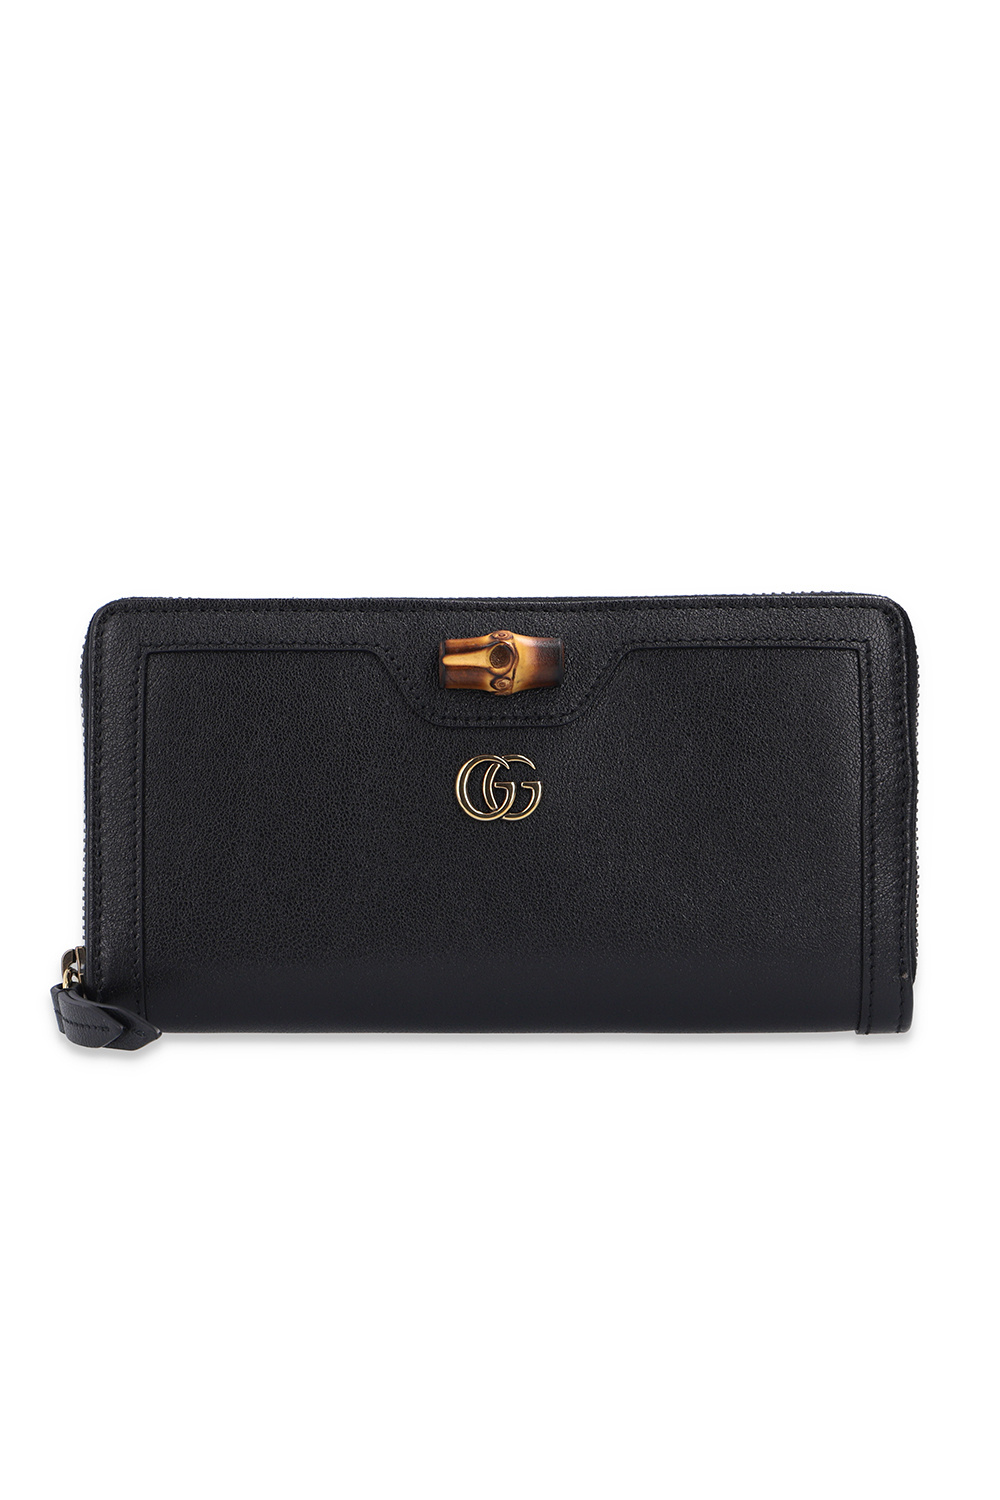 Gucci ‘Diana’ wallet